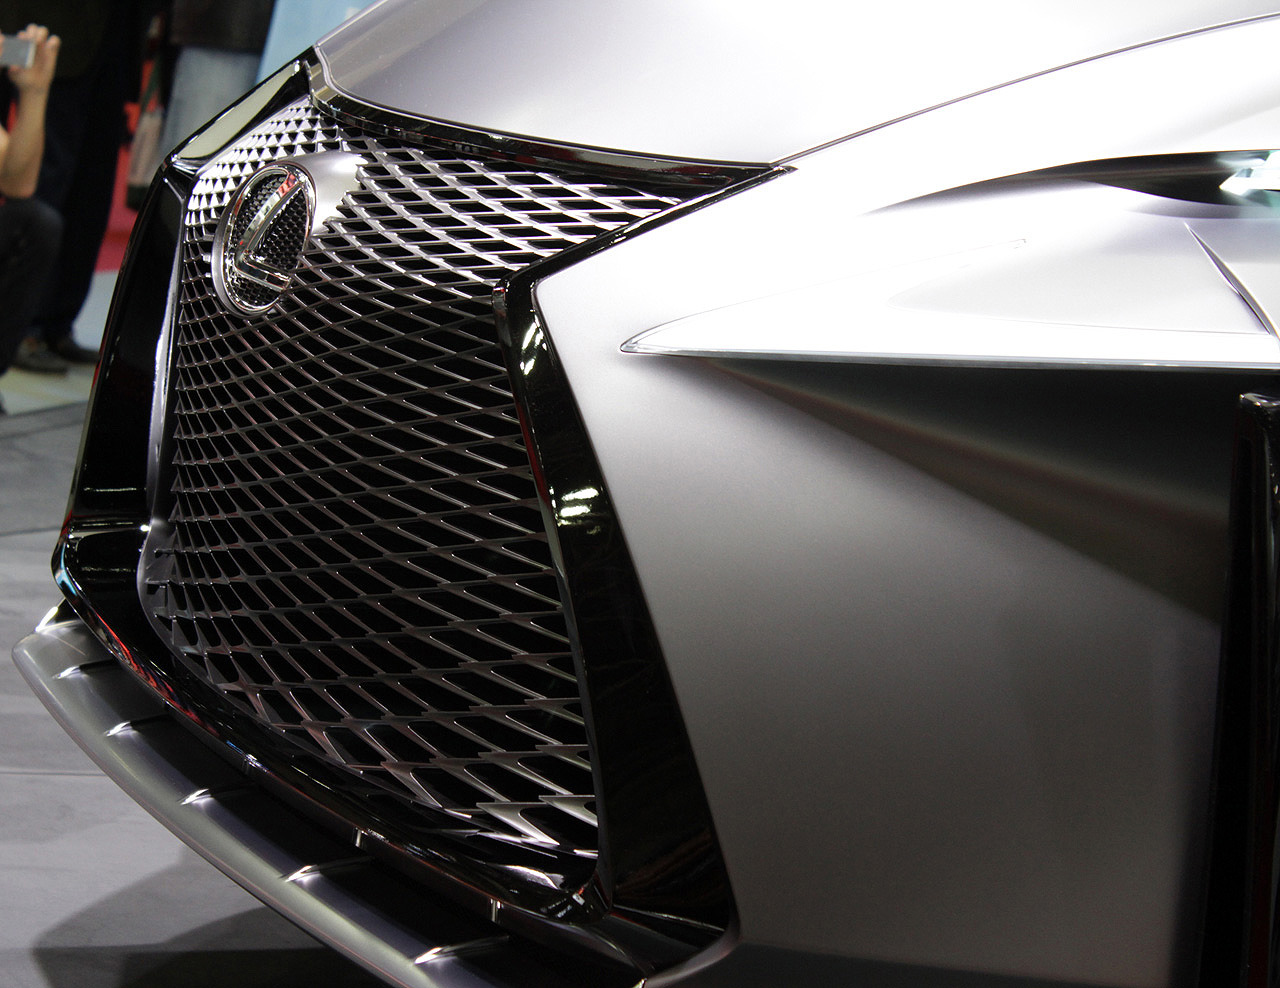 International, Lexus NX frille: Lexus NX Crossover Concept Akan Hadir di Detroit Motor Show 2014